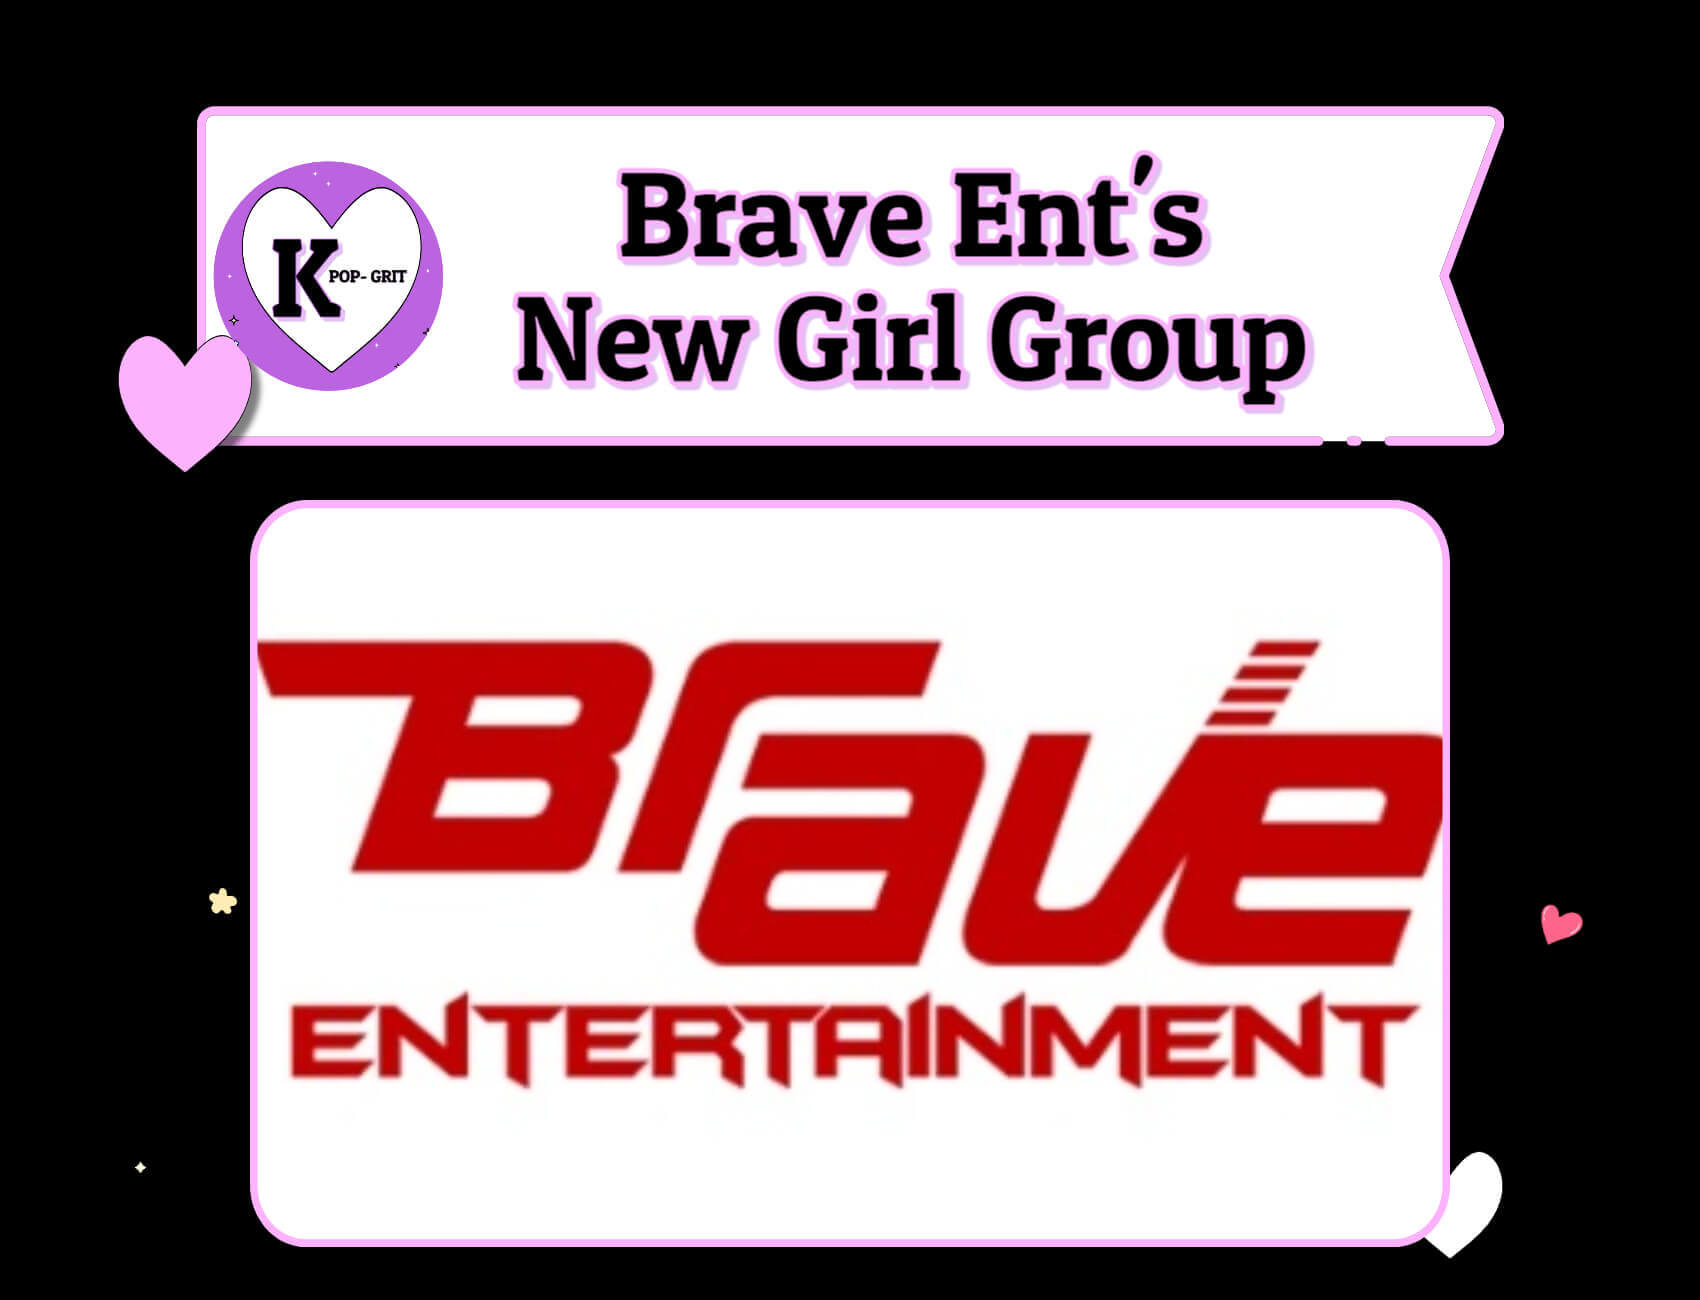 Brave Entertainment's New Girl group